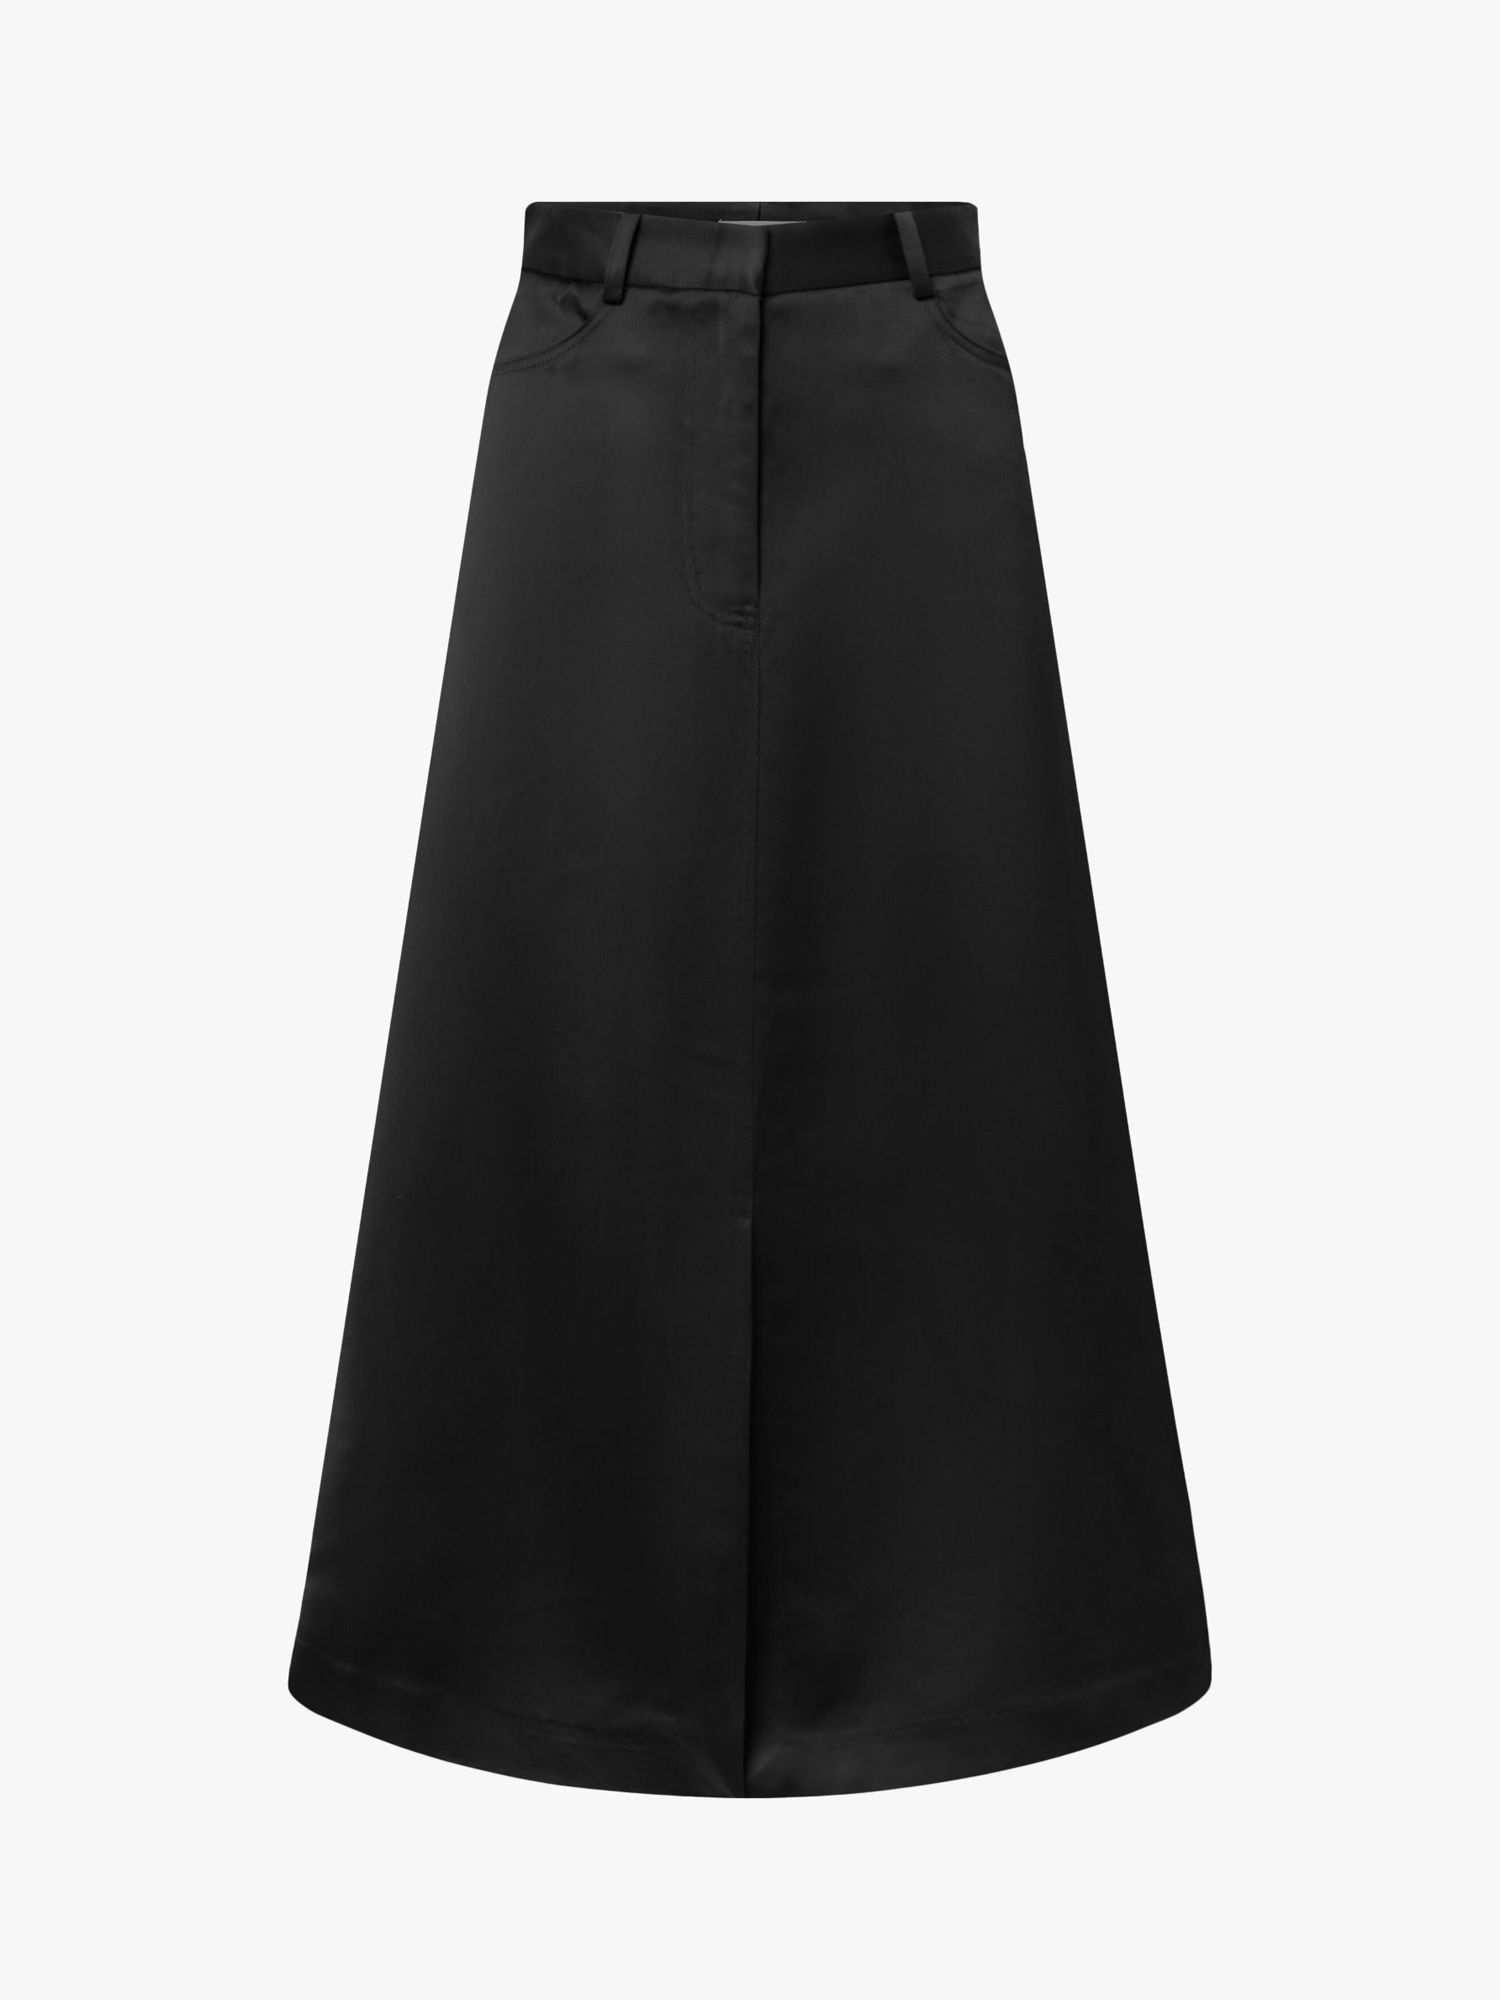 Lovechild 1979 Martina A Line Skirt, Black at John Lewis & Partners